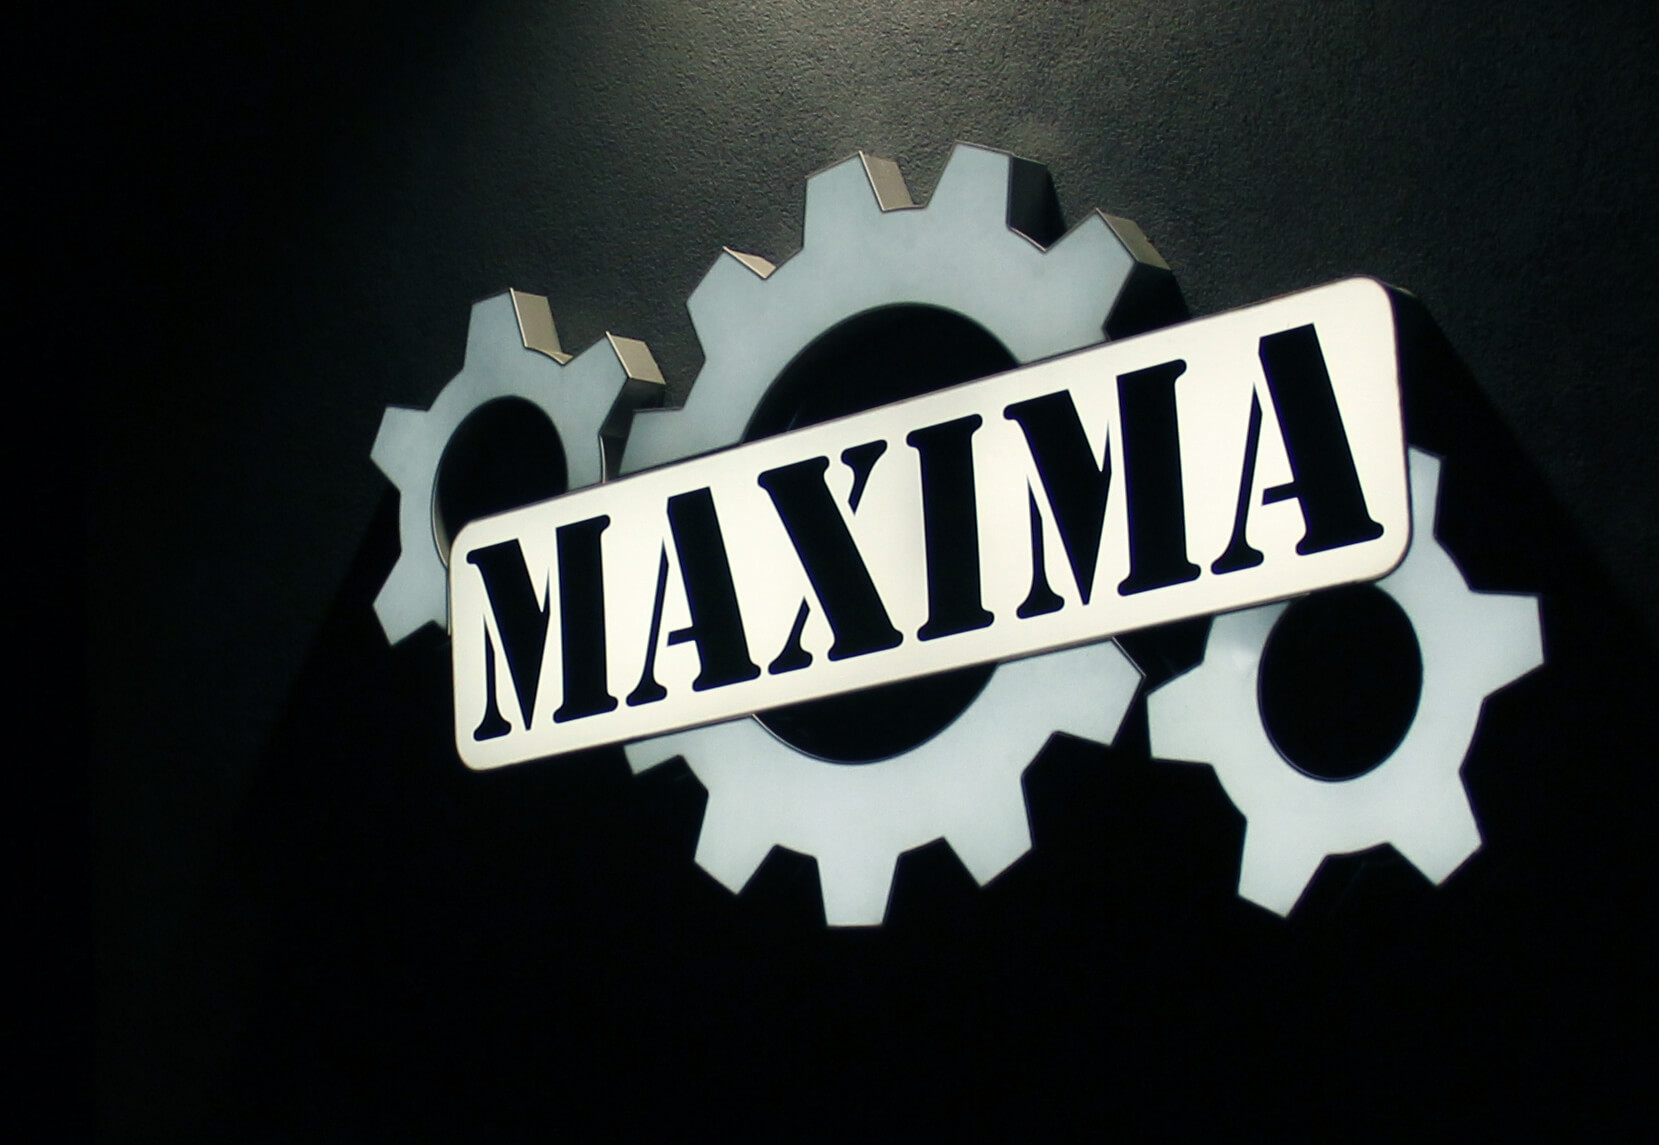 Maxima - Maxima - LED-Paneel an der Wand mit Firmenlogo, aus Plexiglas